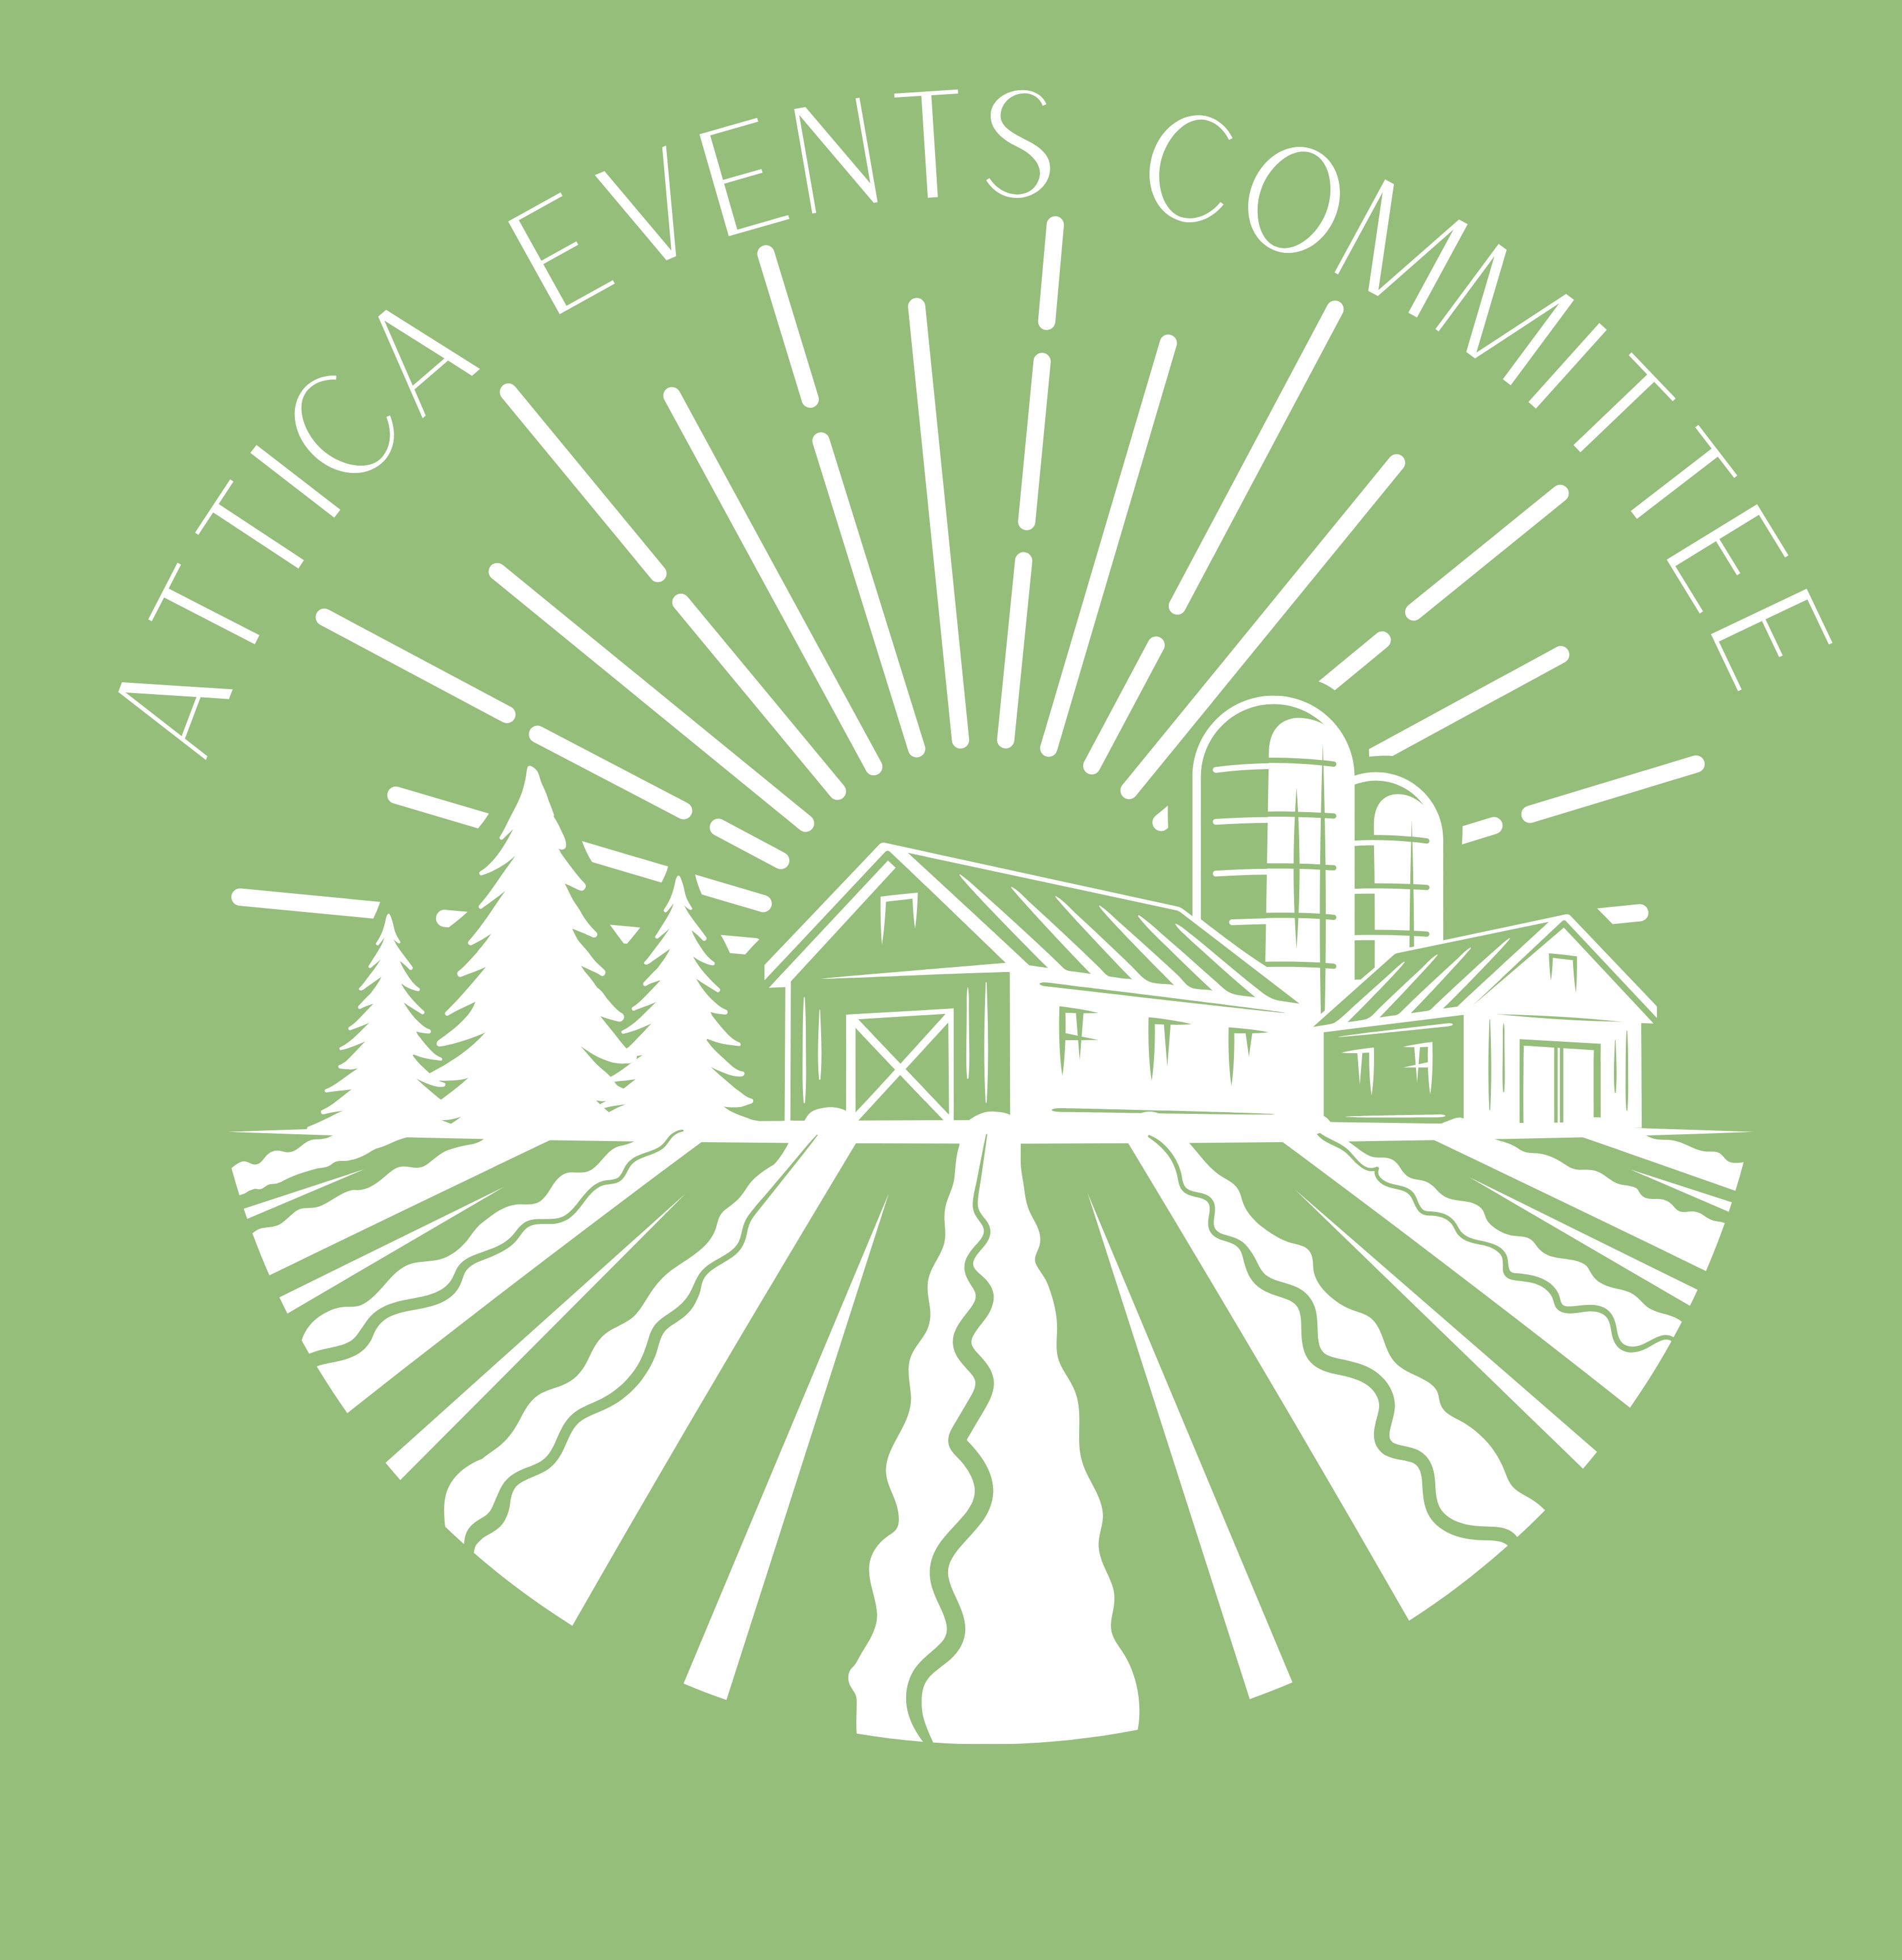 Attica Community Events Committee